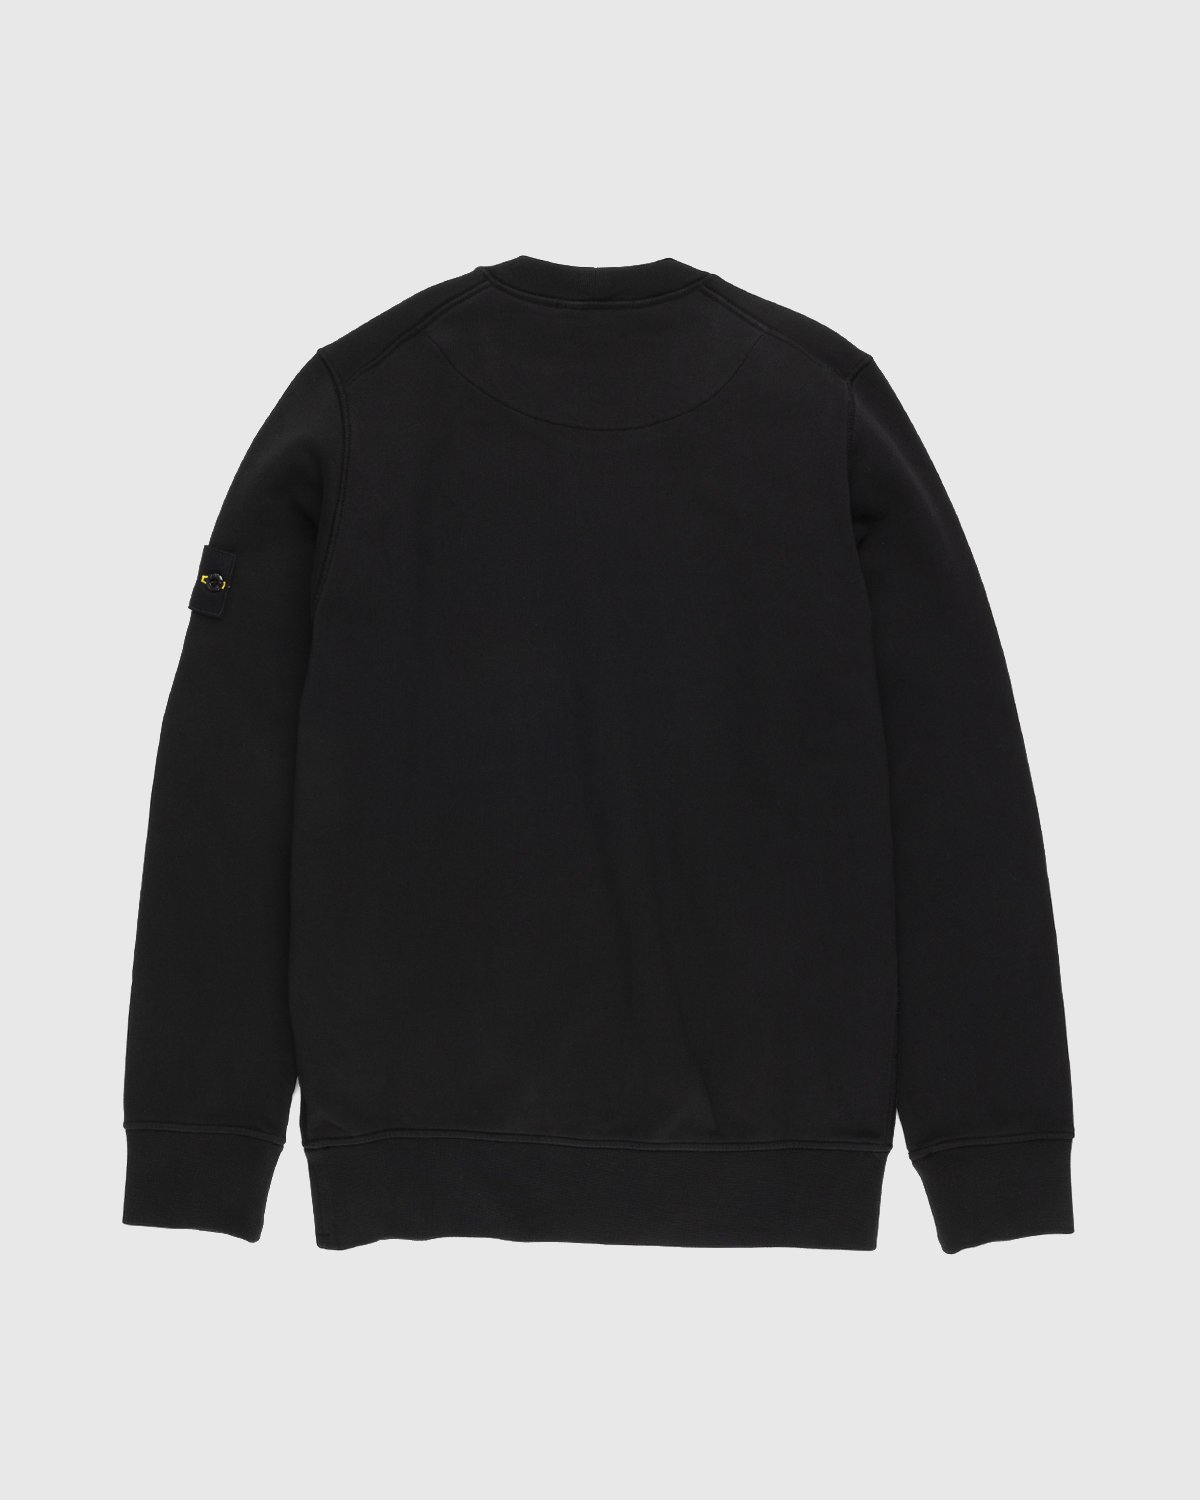 Stone Island - 63051 Garment-Dyed Cotton Fleece Crewneck Black - Clothing - Black - Image 2